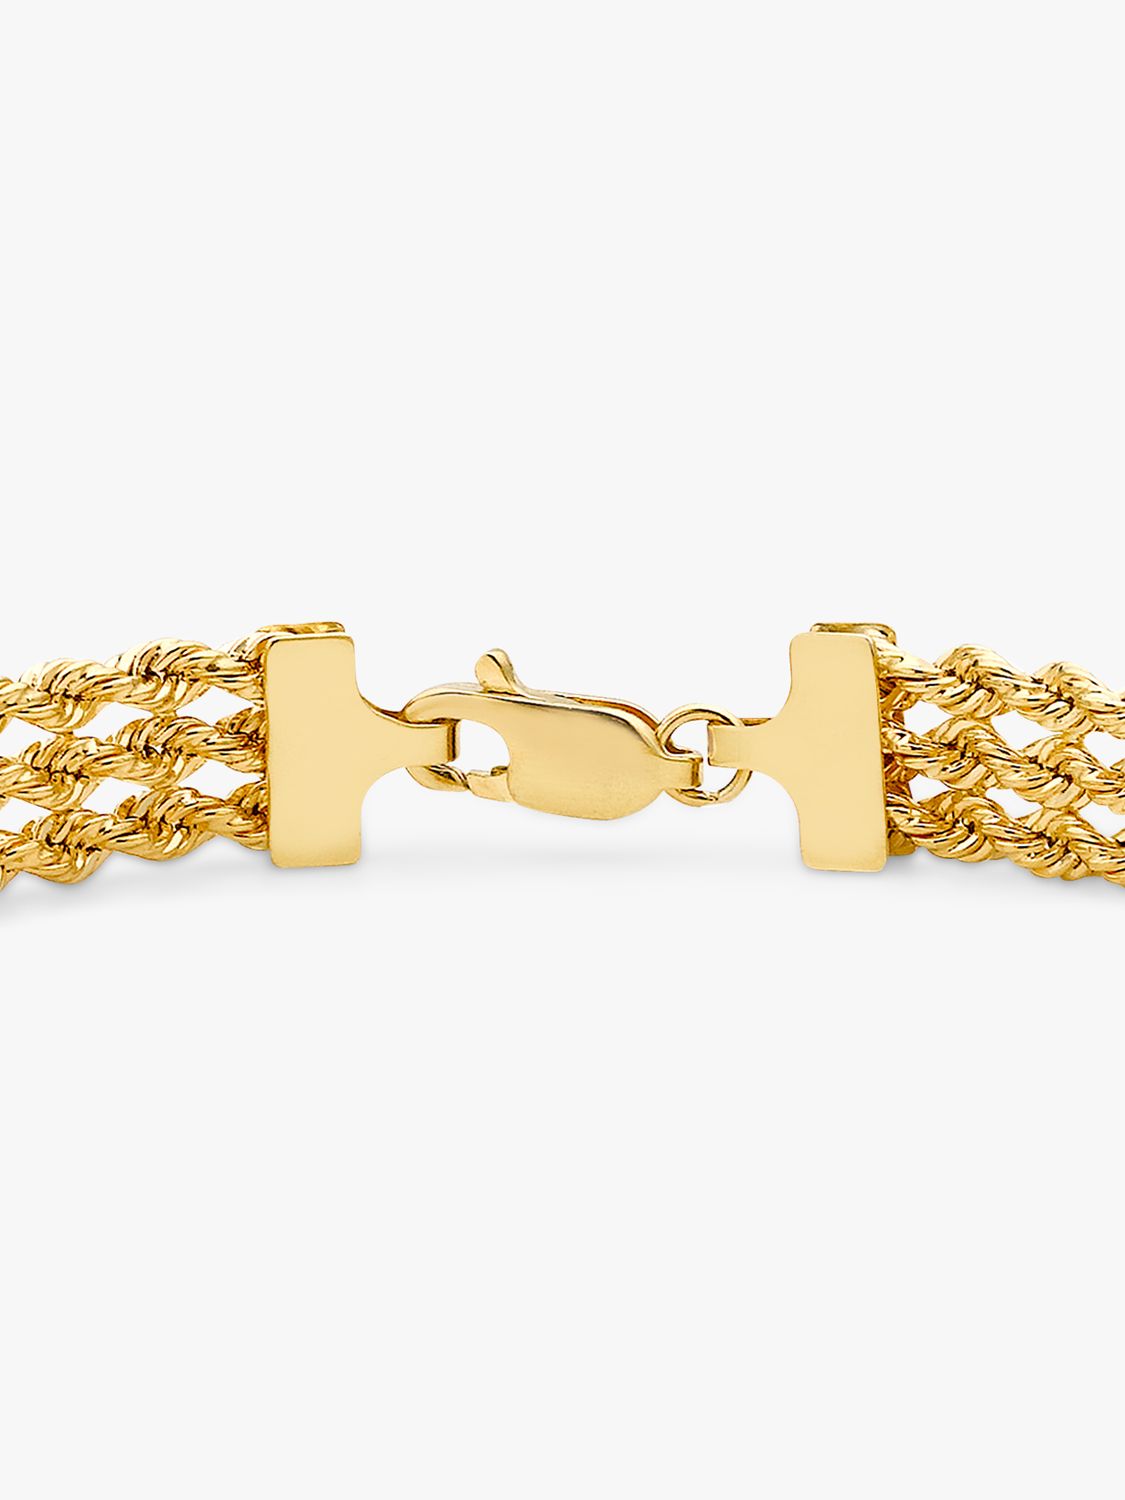 Rope Bracelets – Saints Gold Co.